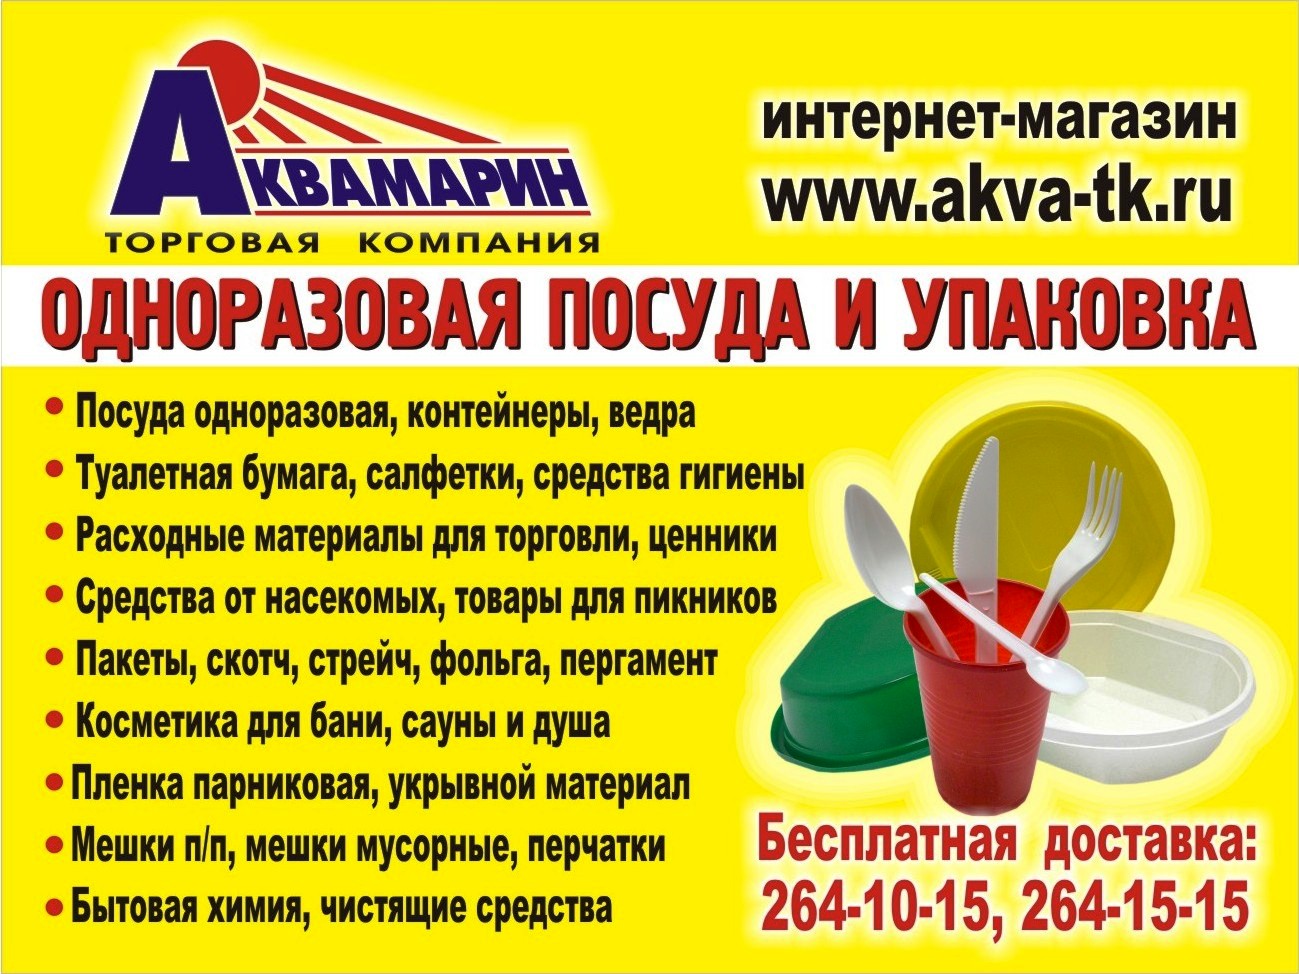 Аквамарин интернет-магазин akva-tk.ru